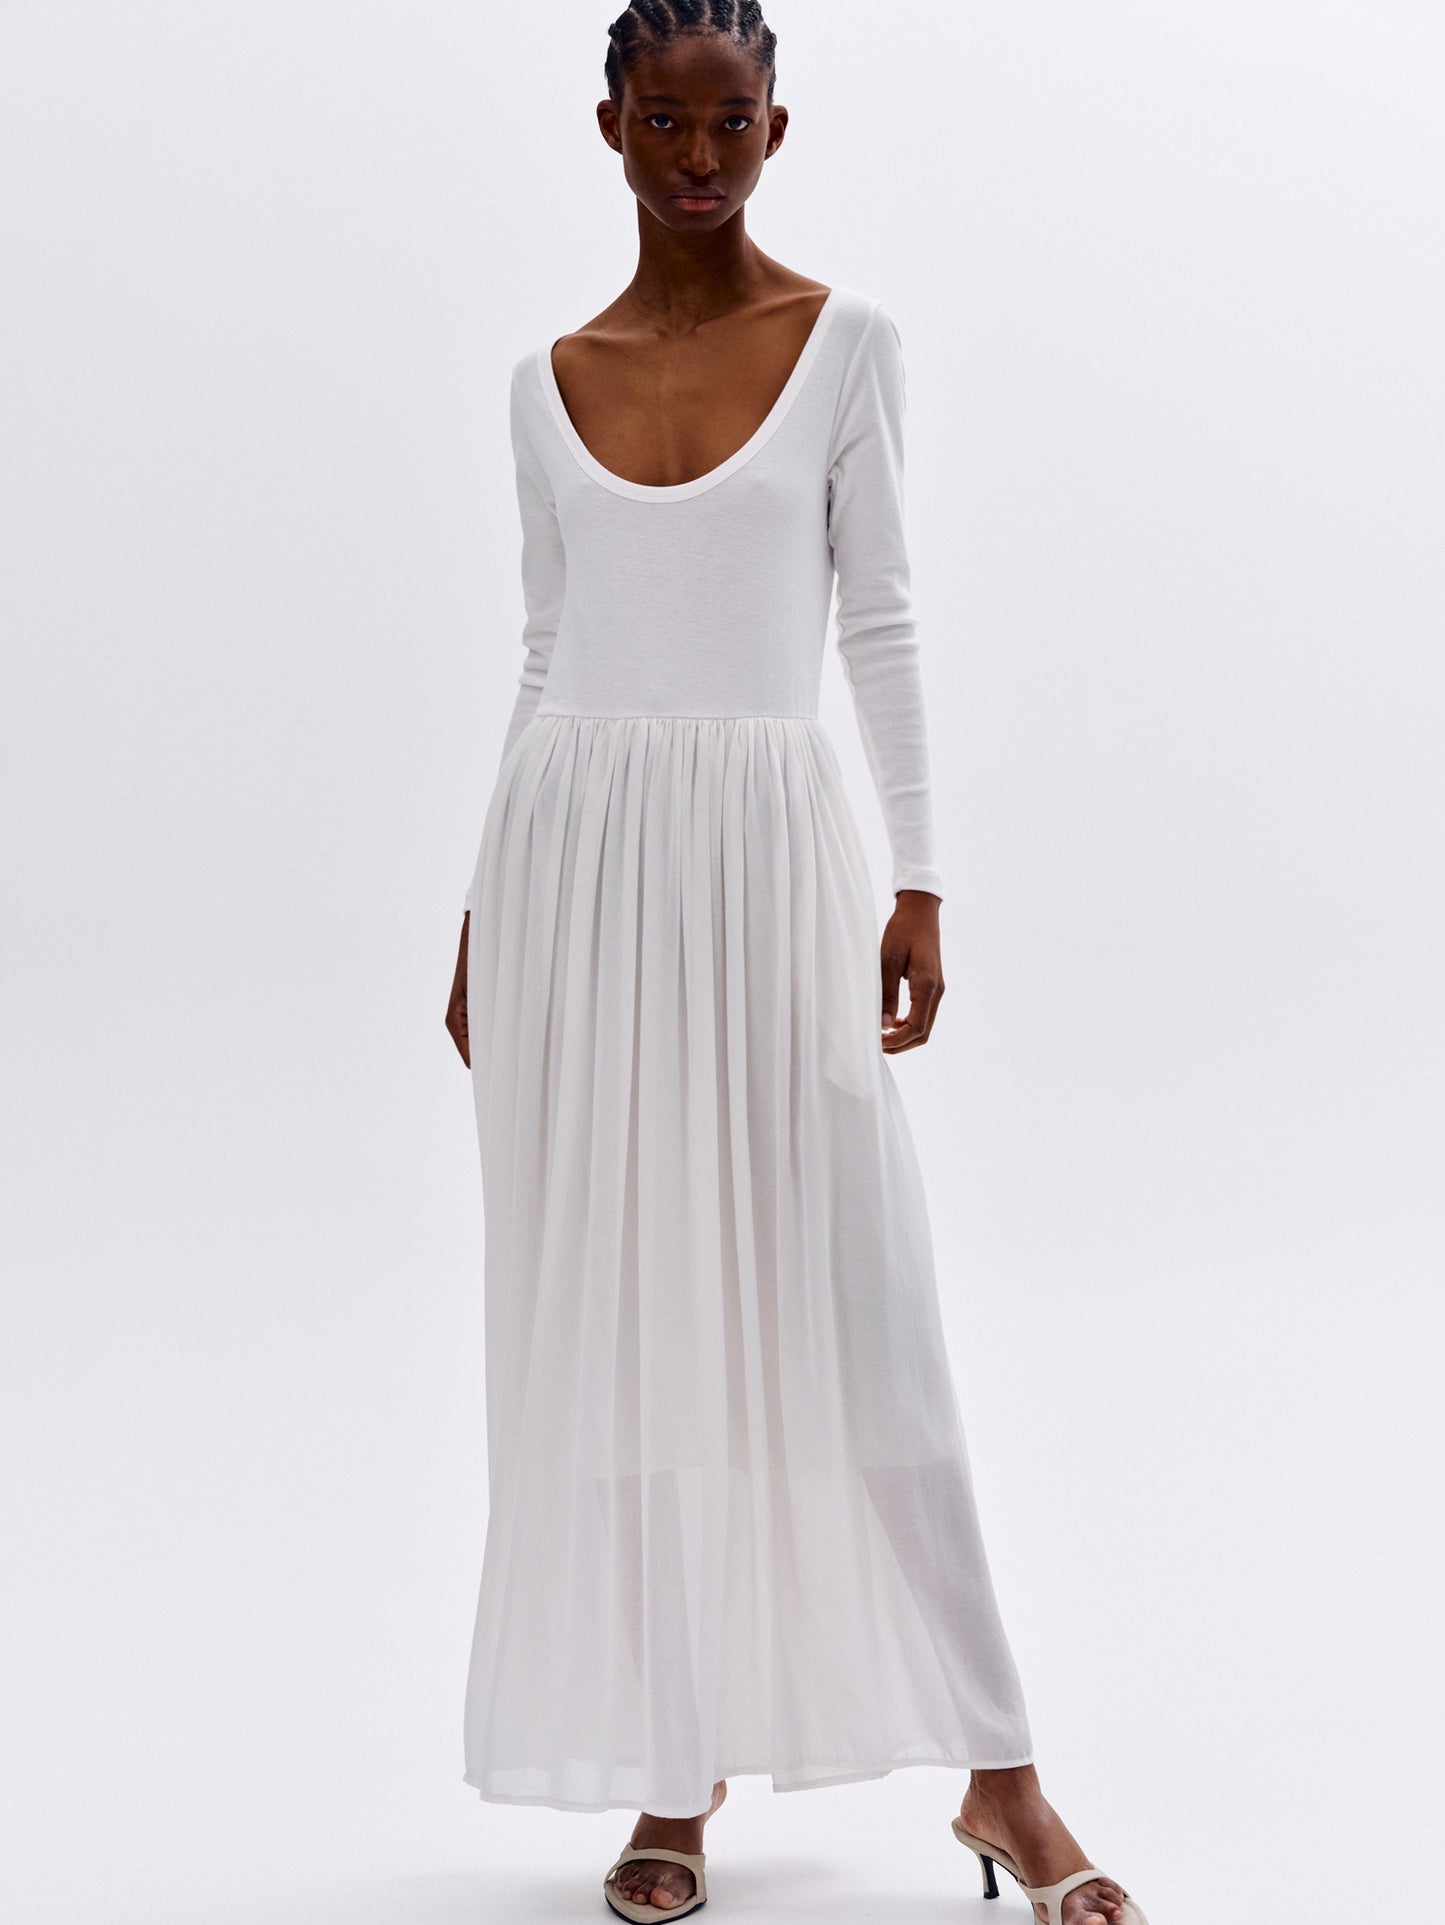 Cotton Scoop Neck Dress, White